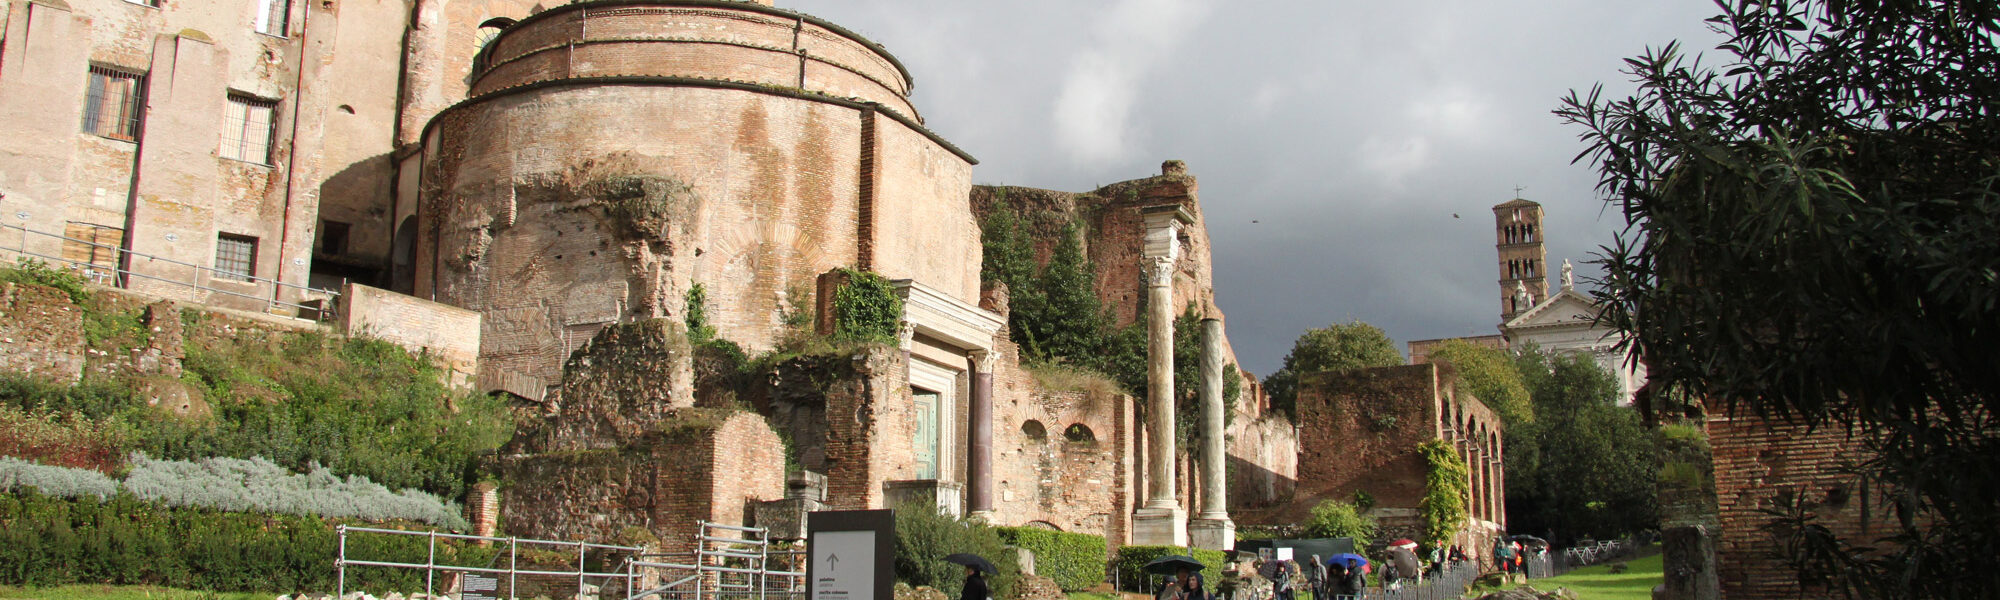 Tempel van Romulus - Rome - Italië